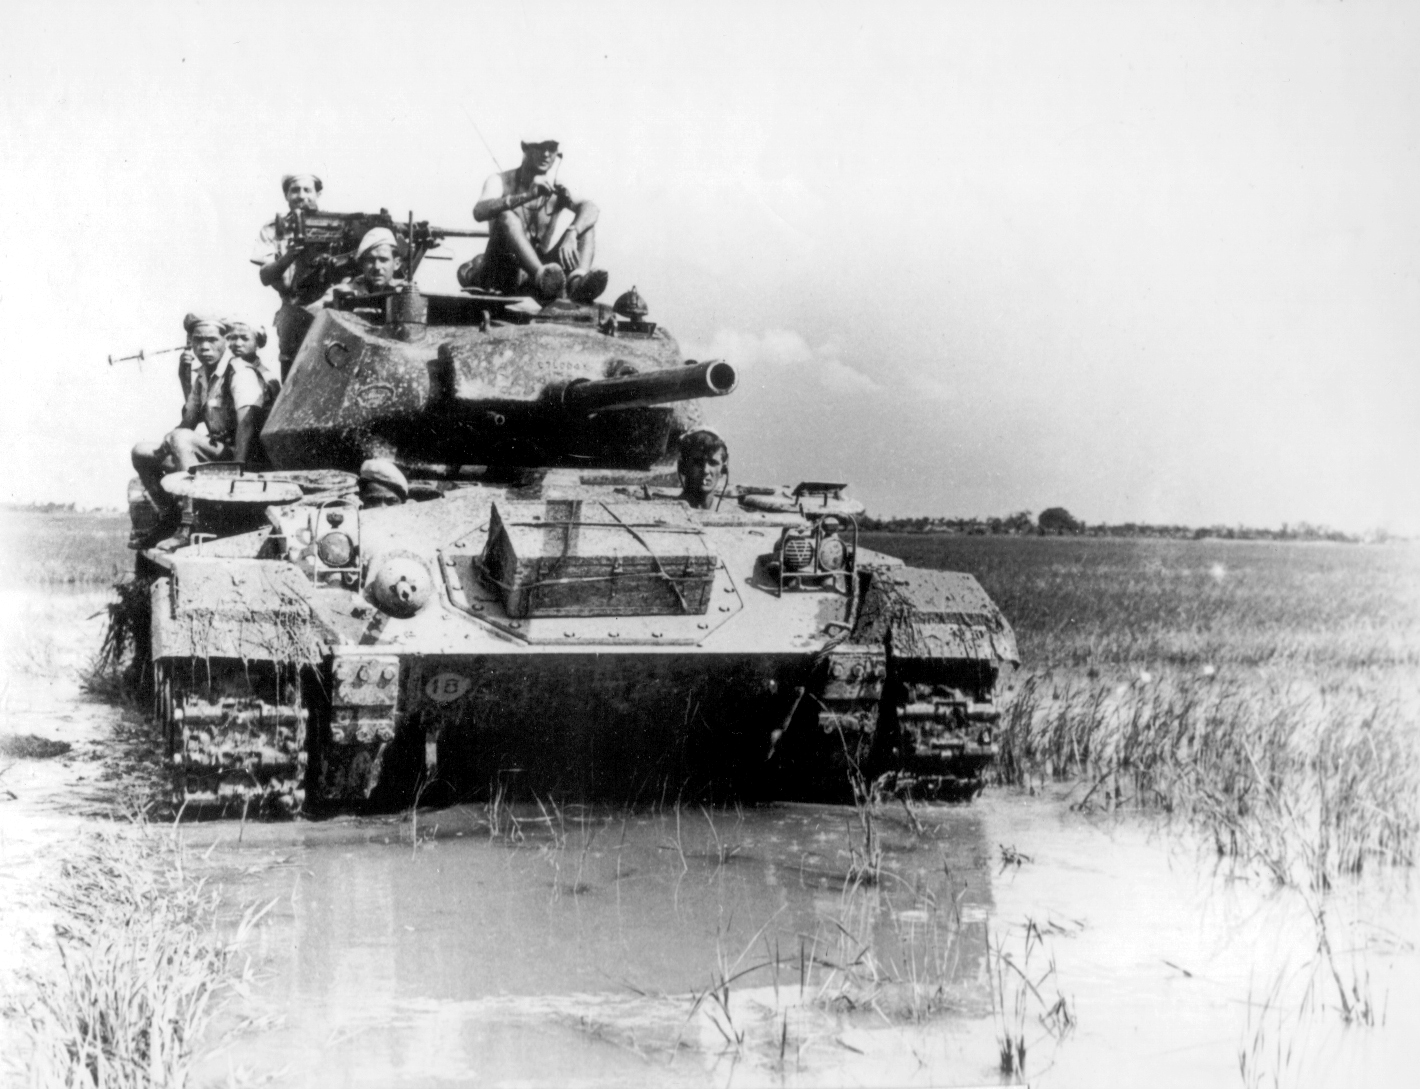 Vietnam American Tanks